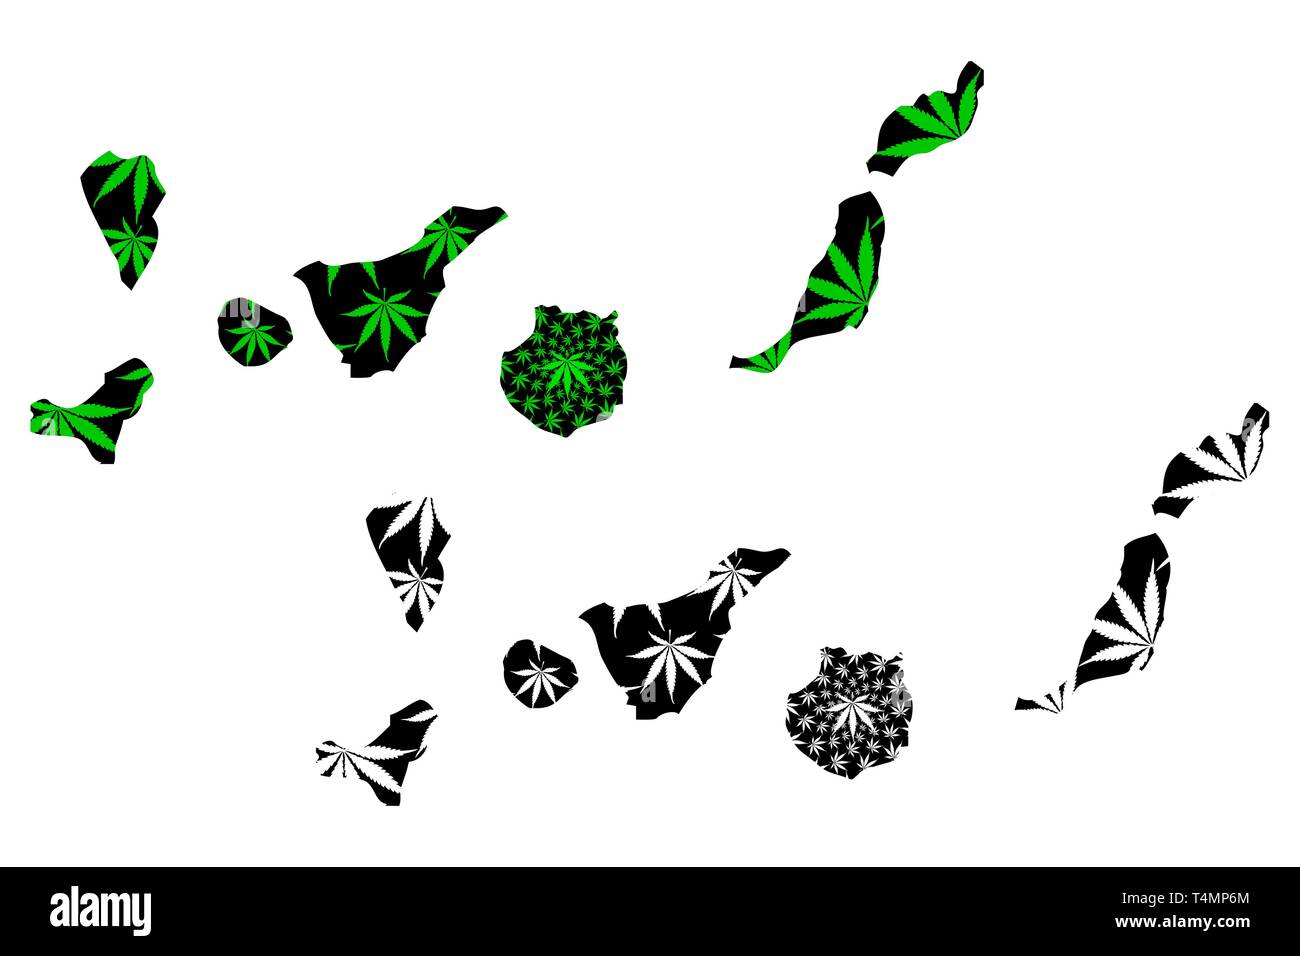 Canaries - carte feuille de cannabis est vert et noir, Islas Canarias carte de marijuana, THC) feuillage, Illustration de Vecteur